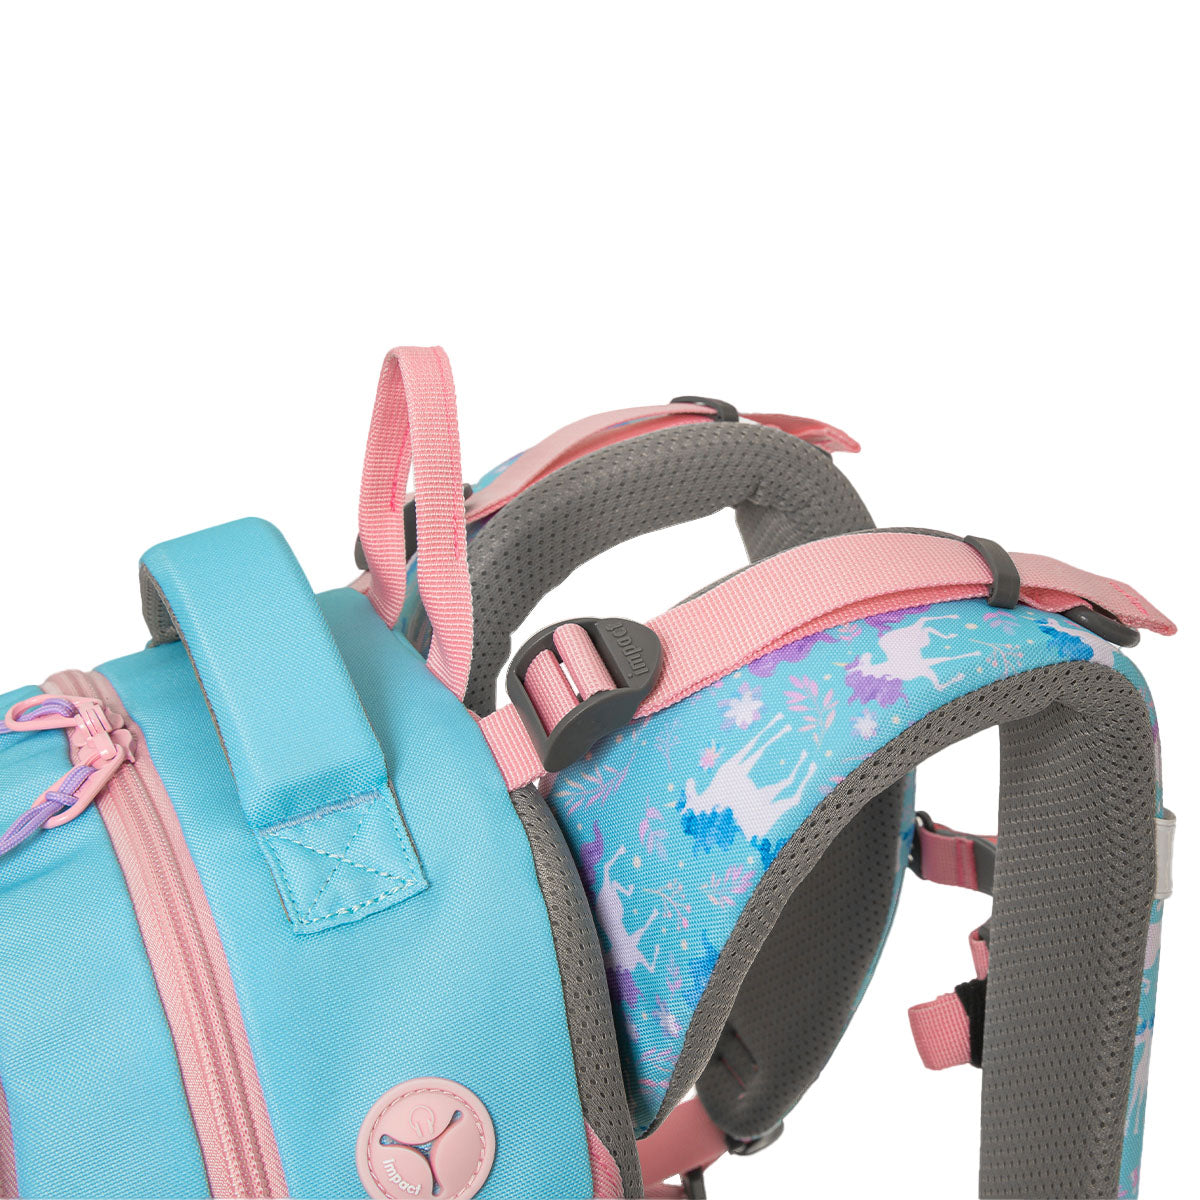 IMPACT Ergo-Comfort Spinal Support School Backpack, IM-00226